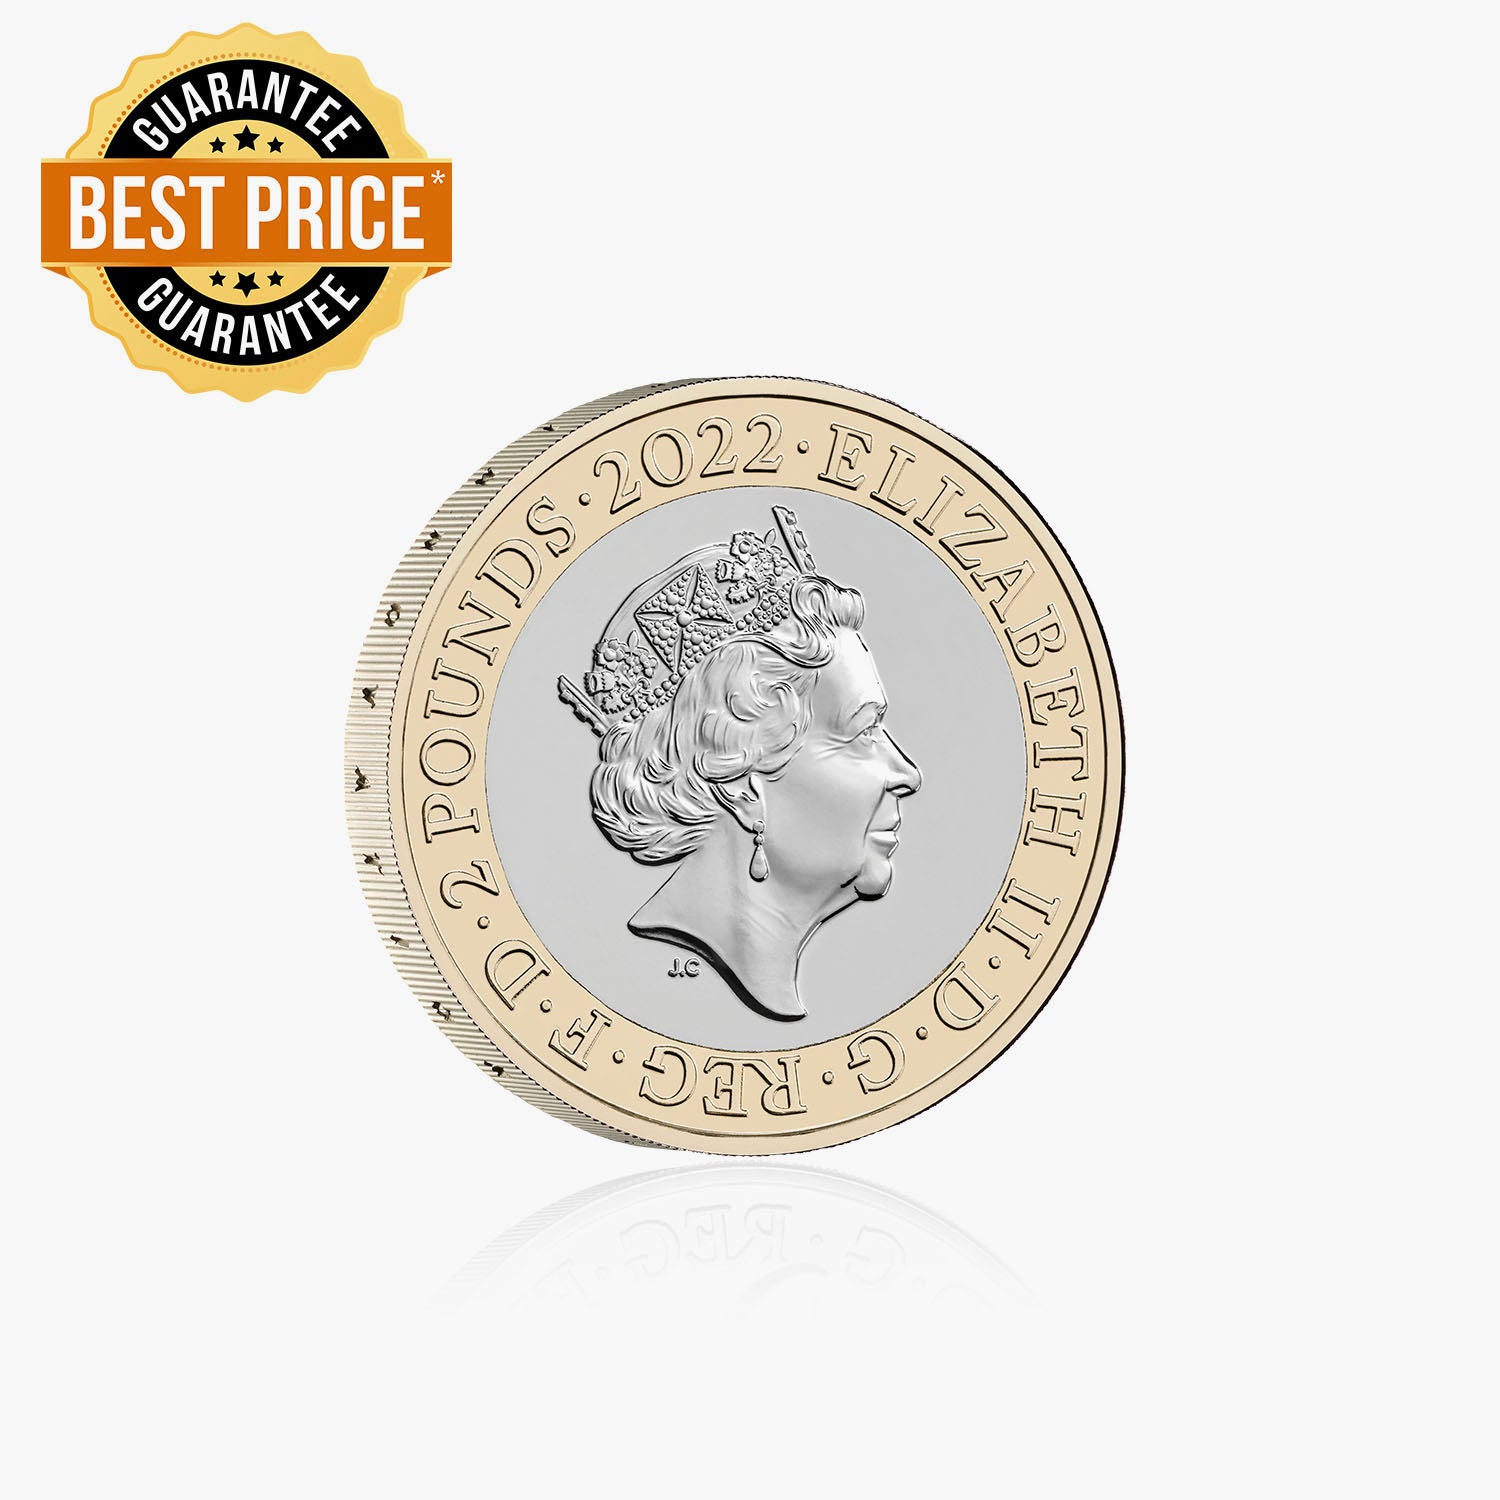 Alexander Graham Bell 2022 UK £2 Brilliant Uncirculated Coin